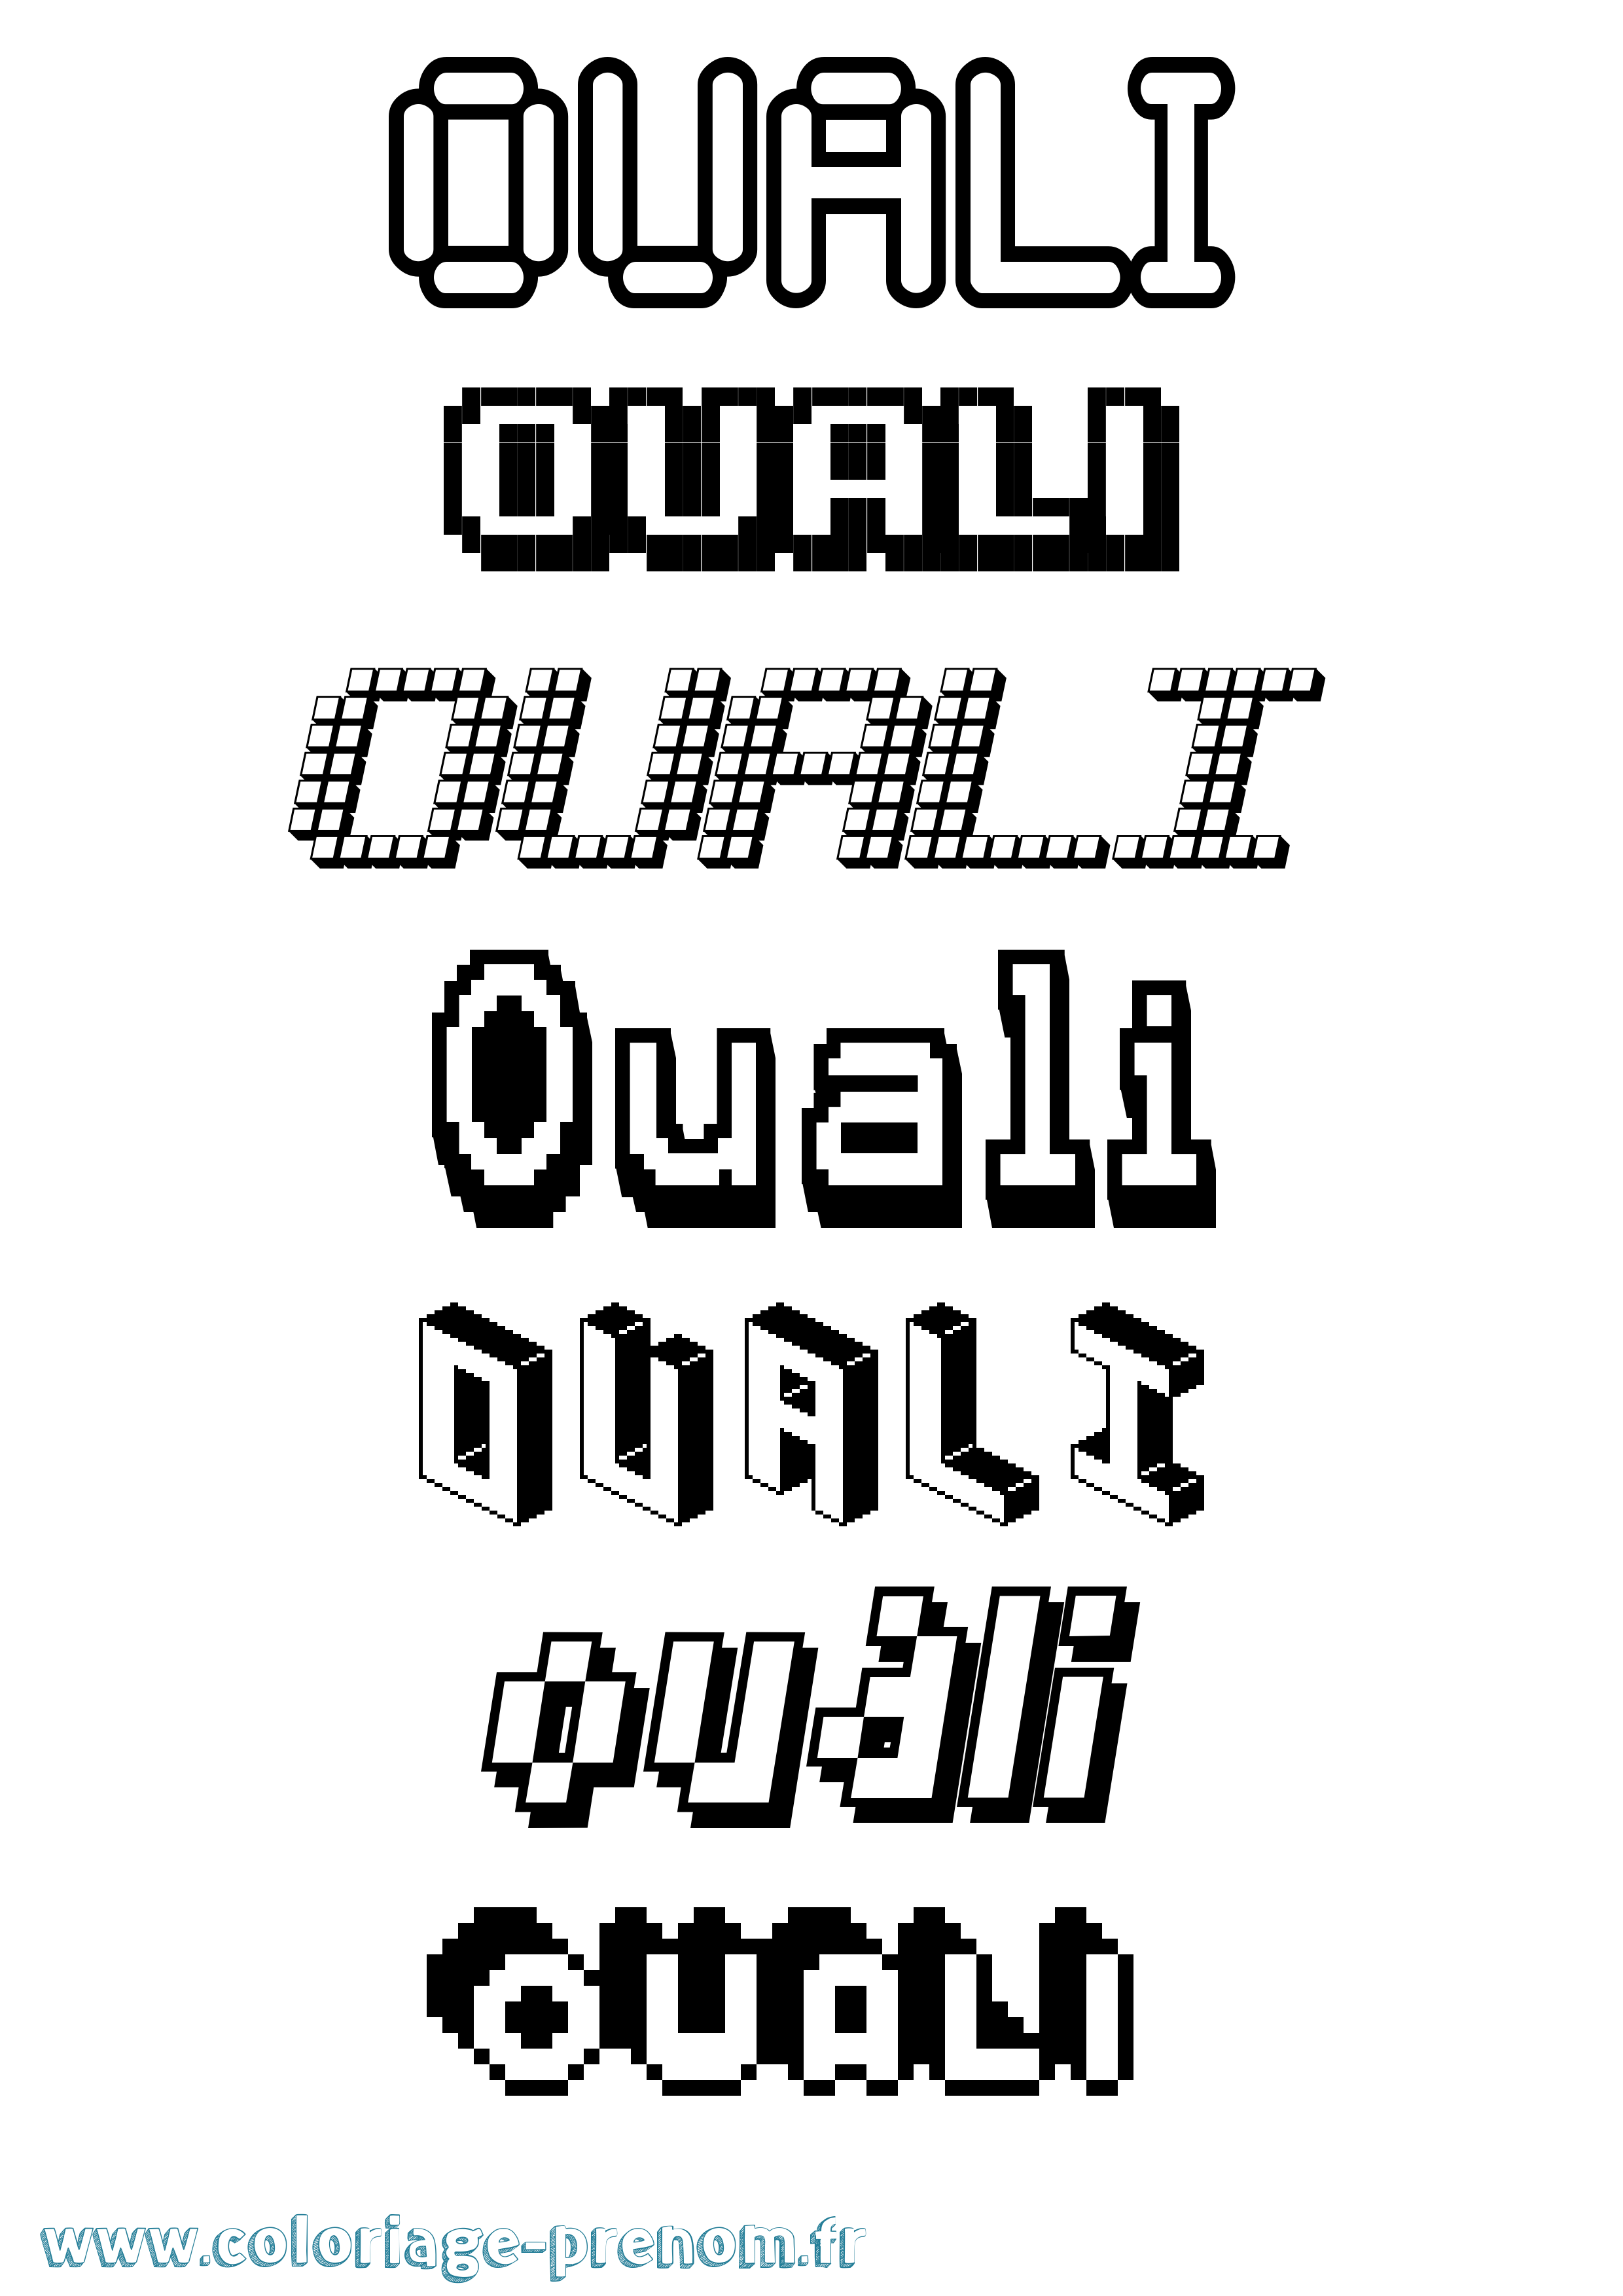 Coloriage prénom Ouali Pixel